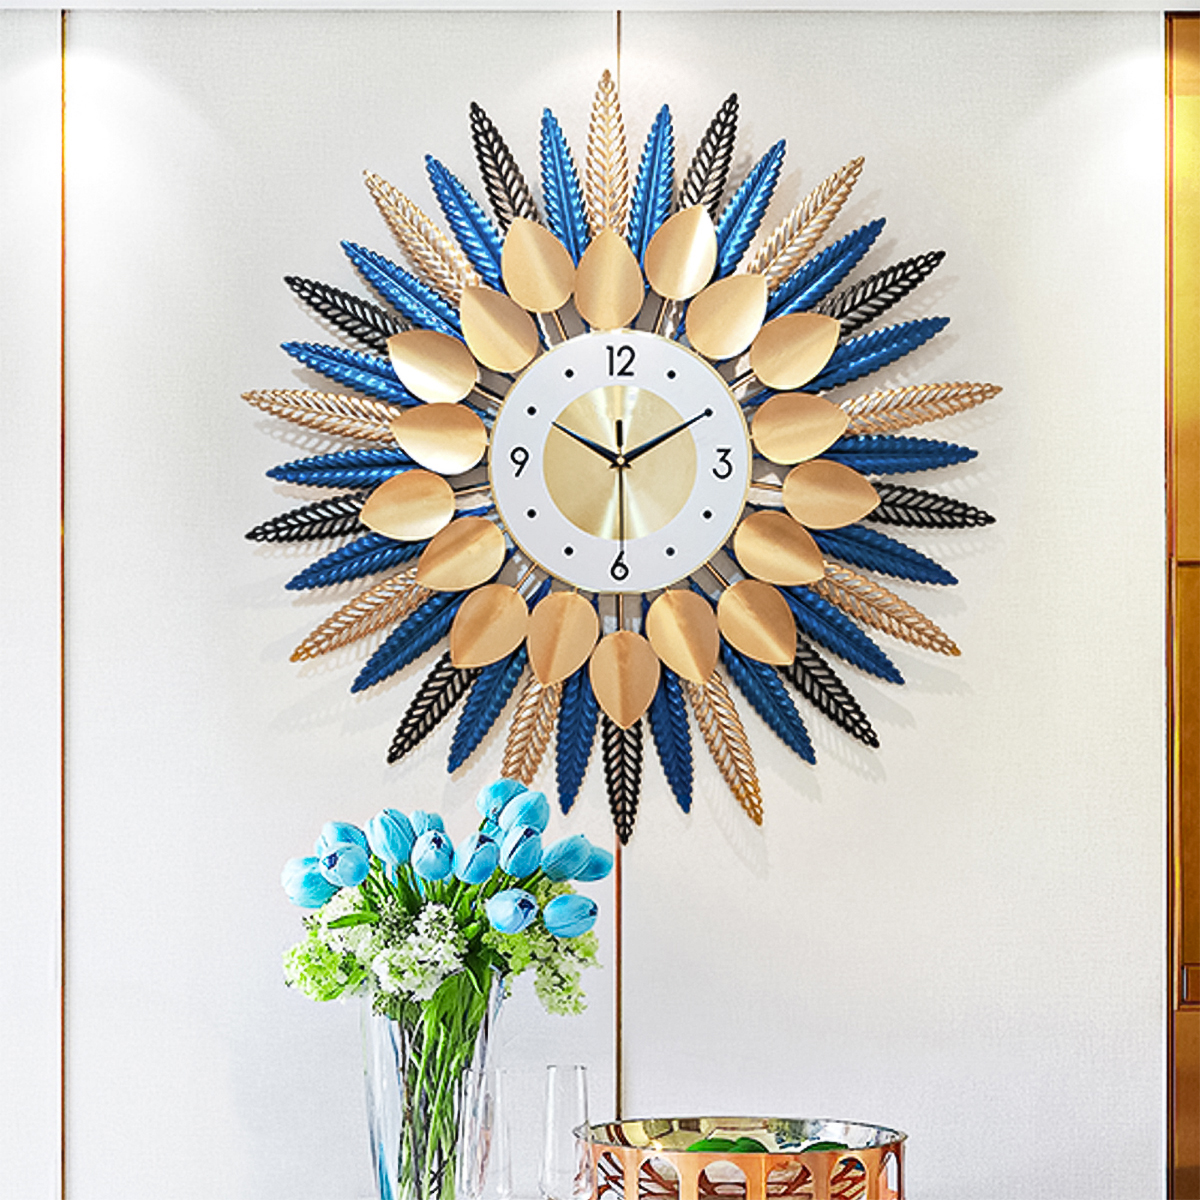 Ceas de perete, stil elegant, Metal, mecanism Silentios, D4202, 70 cm, Multicolor image